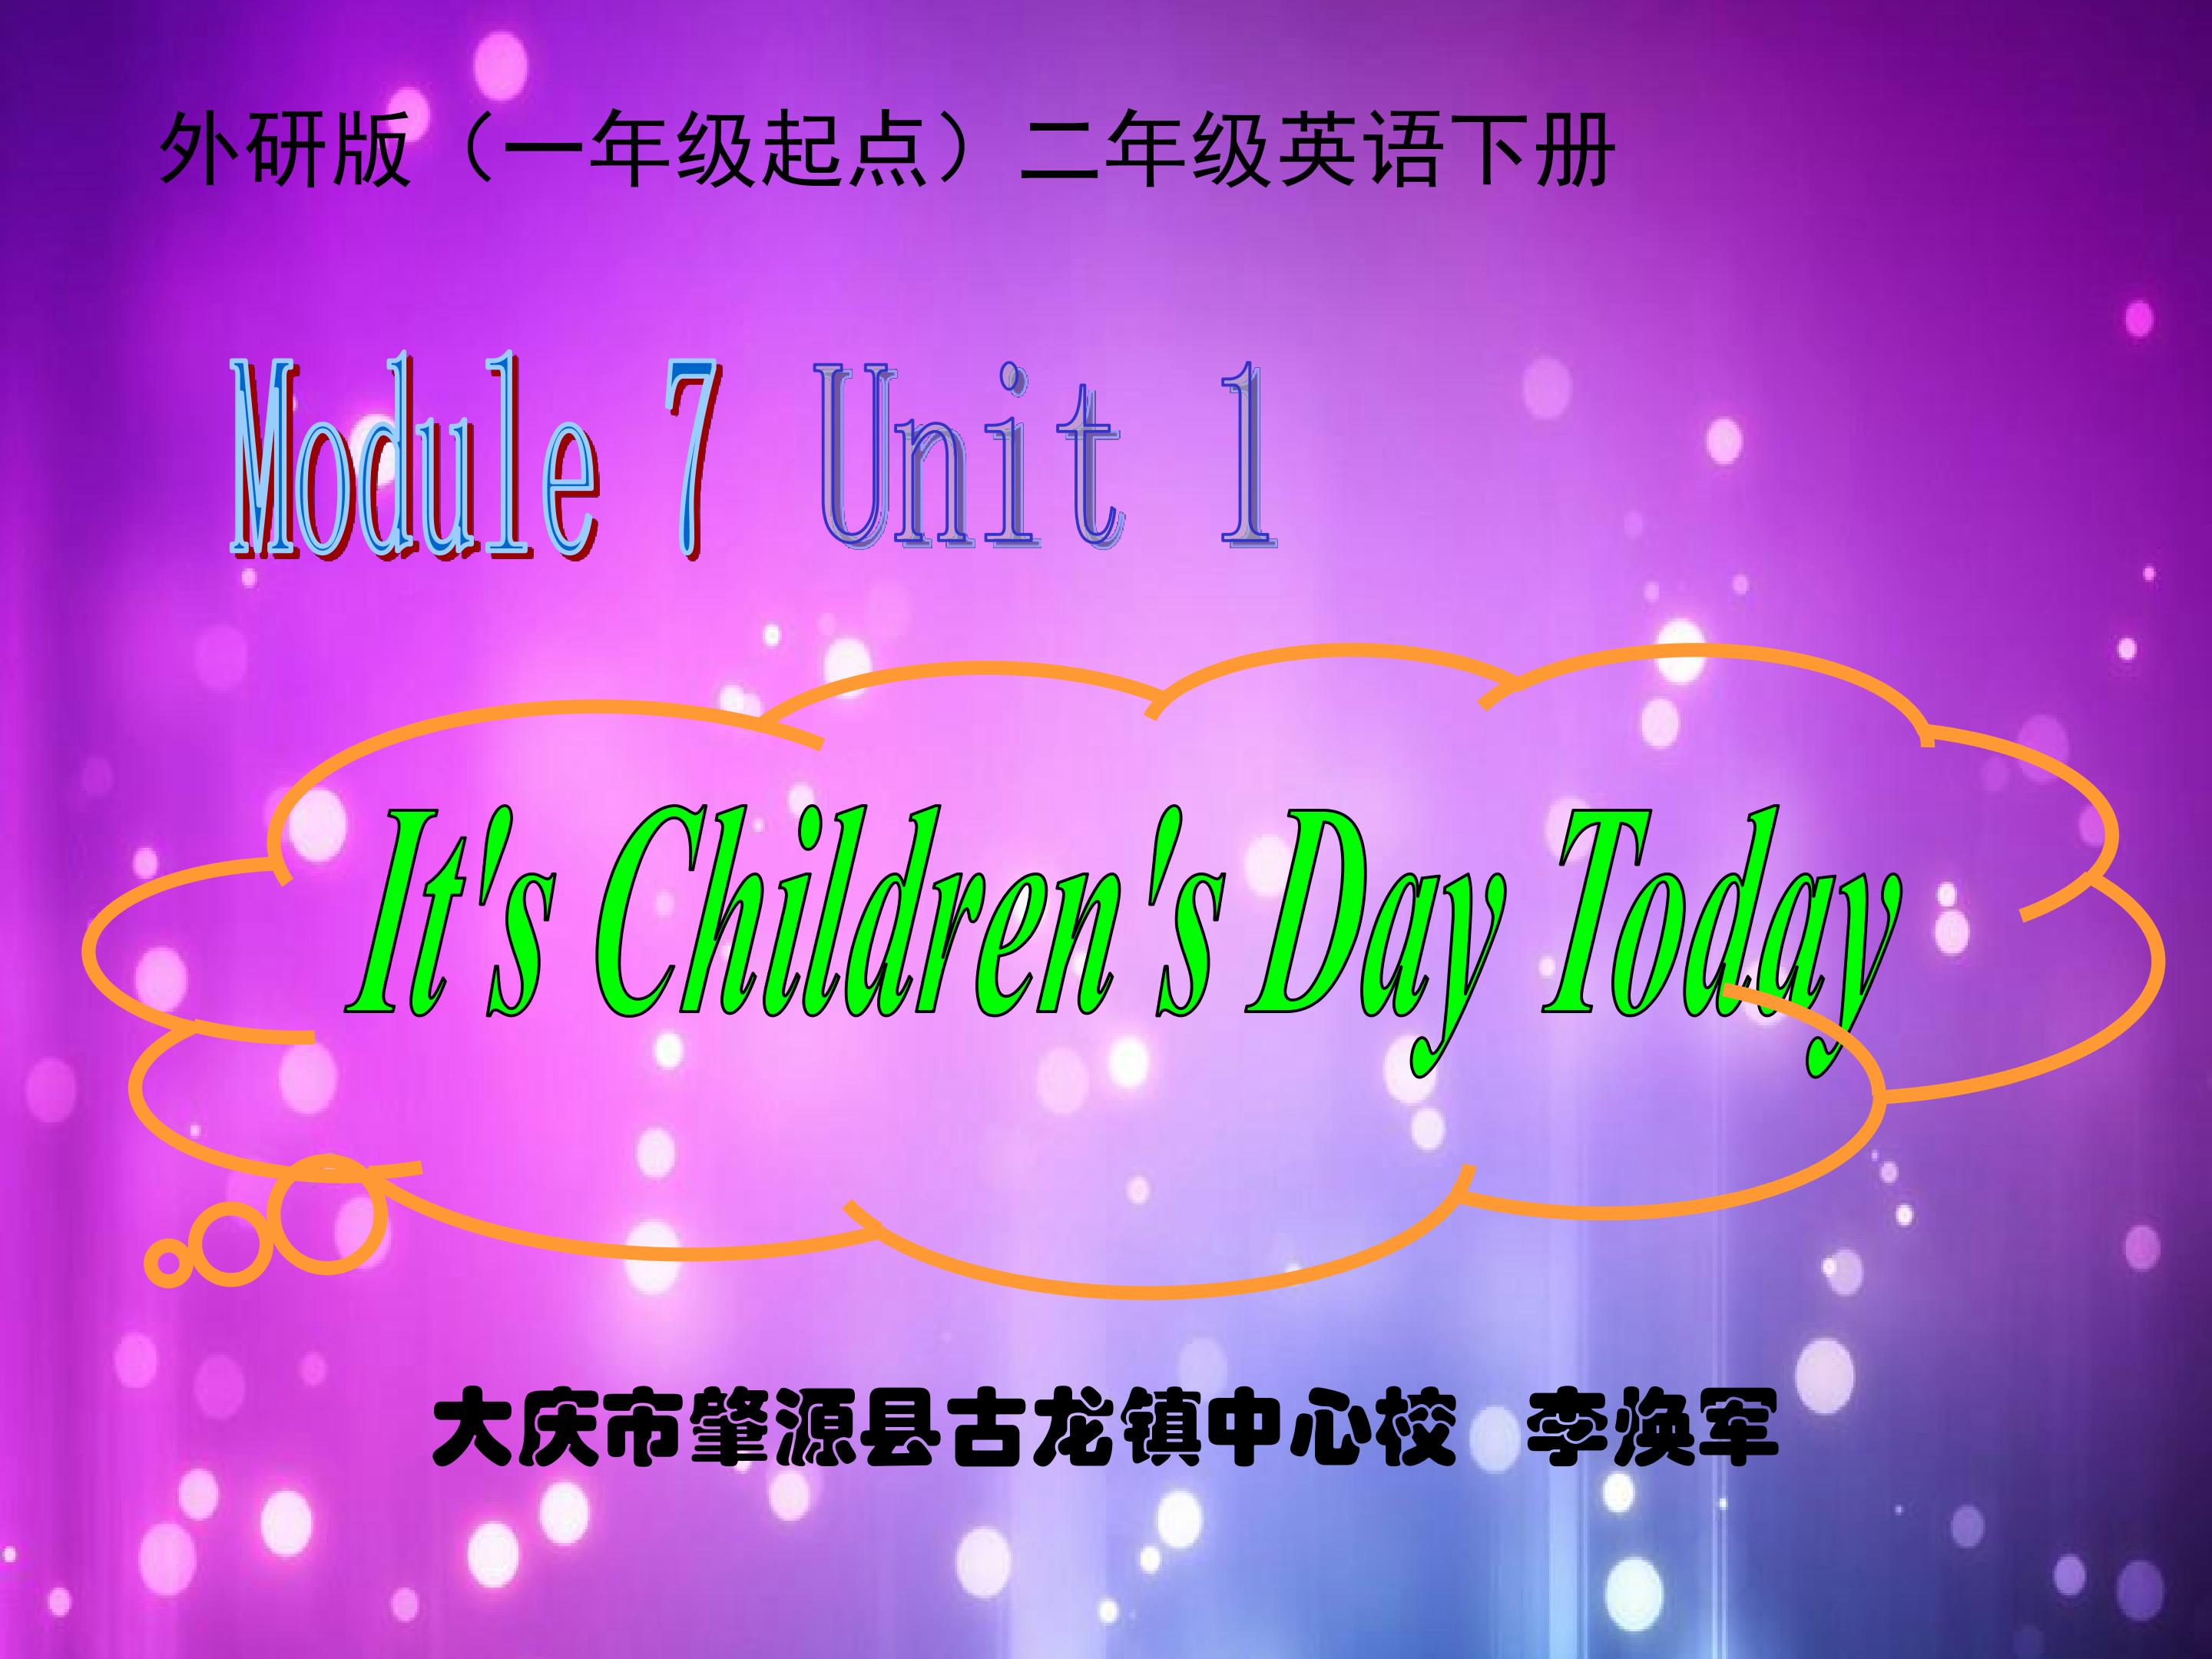 《It's Children's Day today》